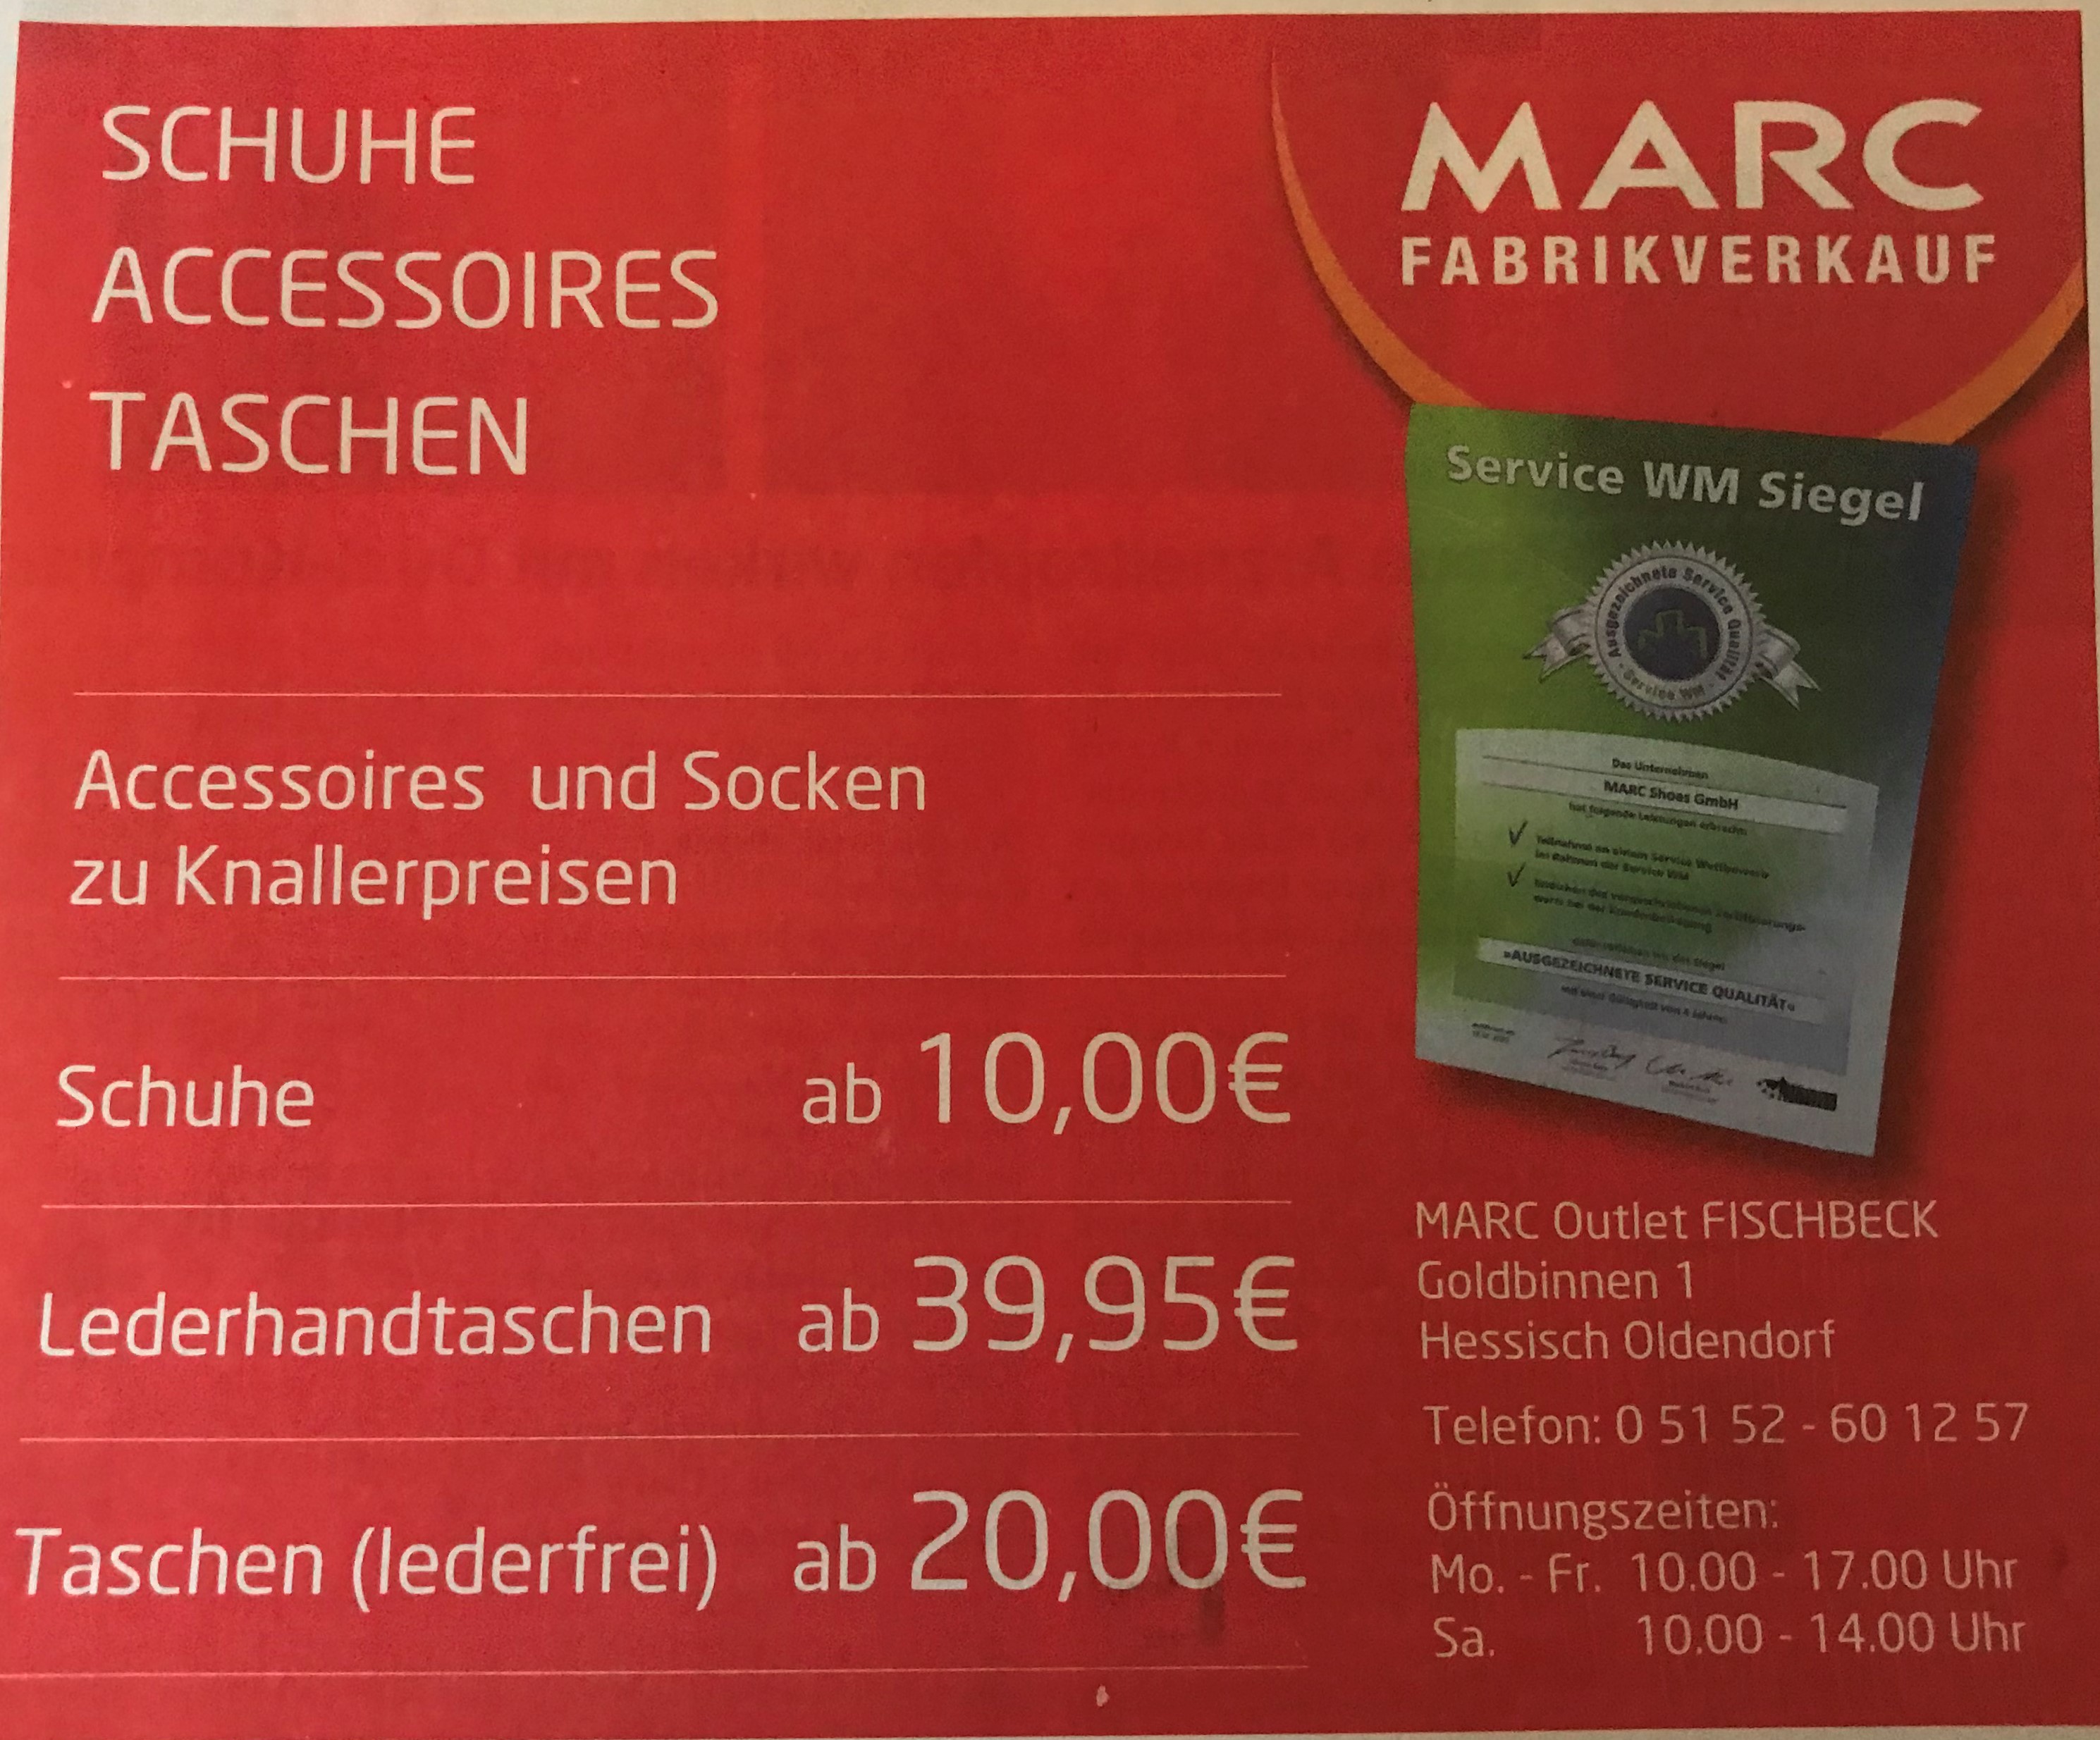 MARC Shoes GmbH in 31840 Hessisch Oldendorf-Fischbeck